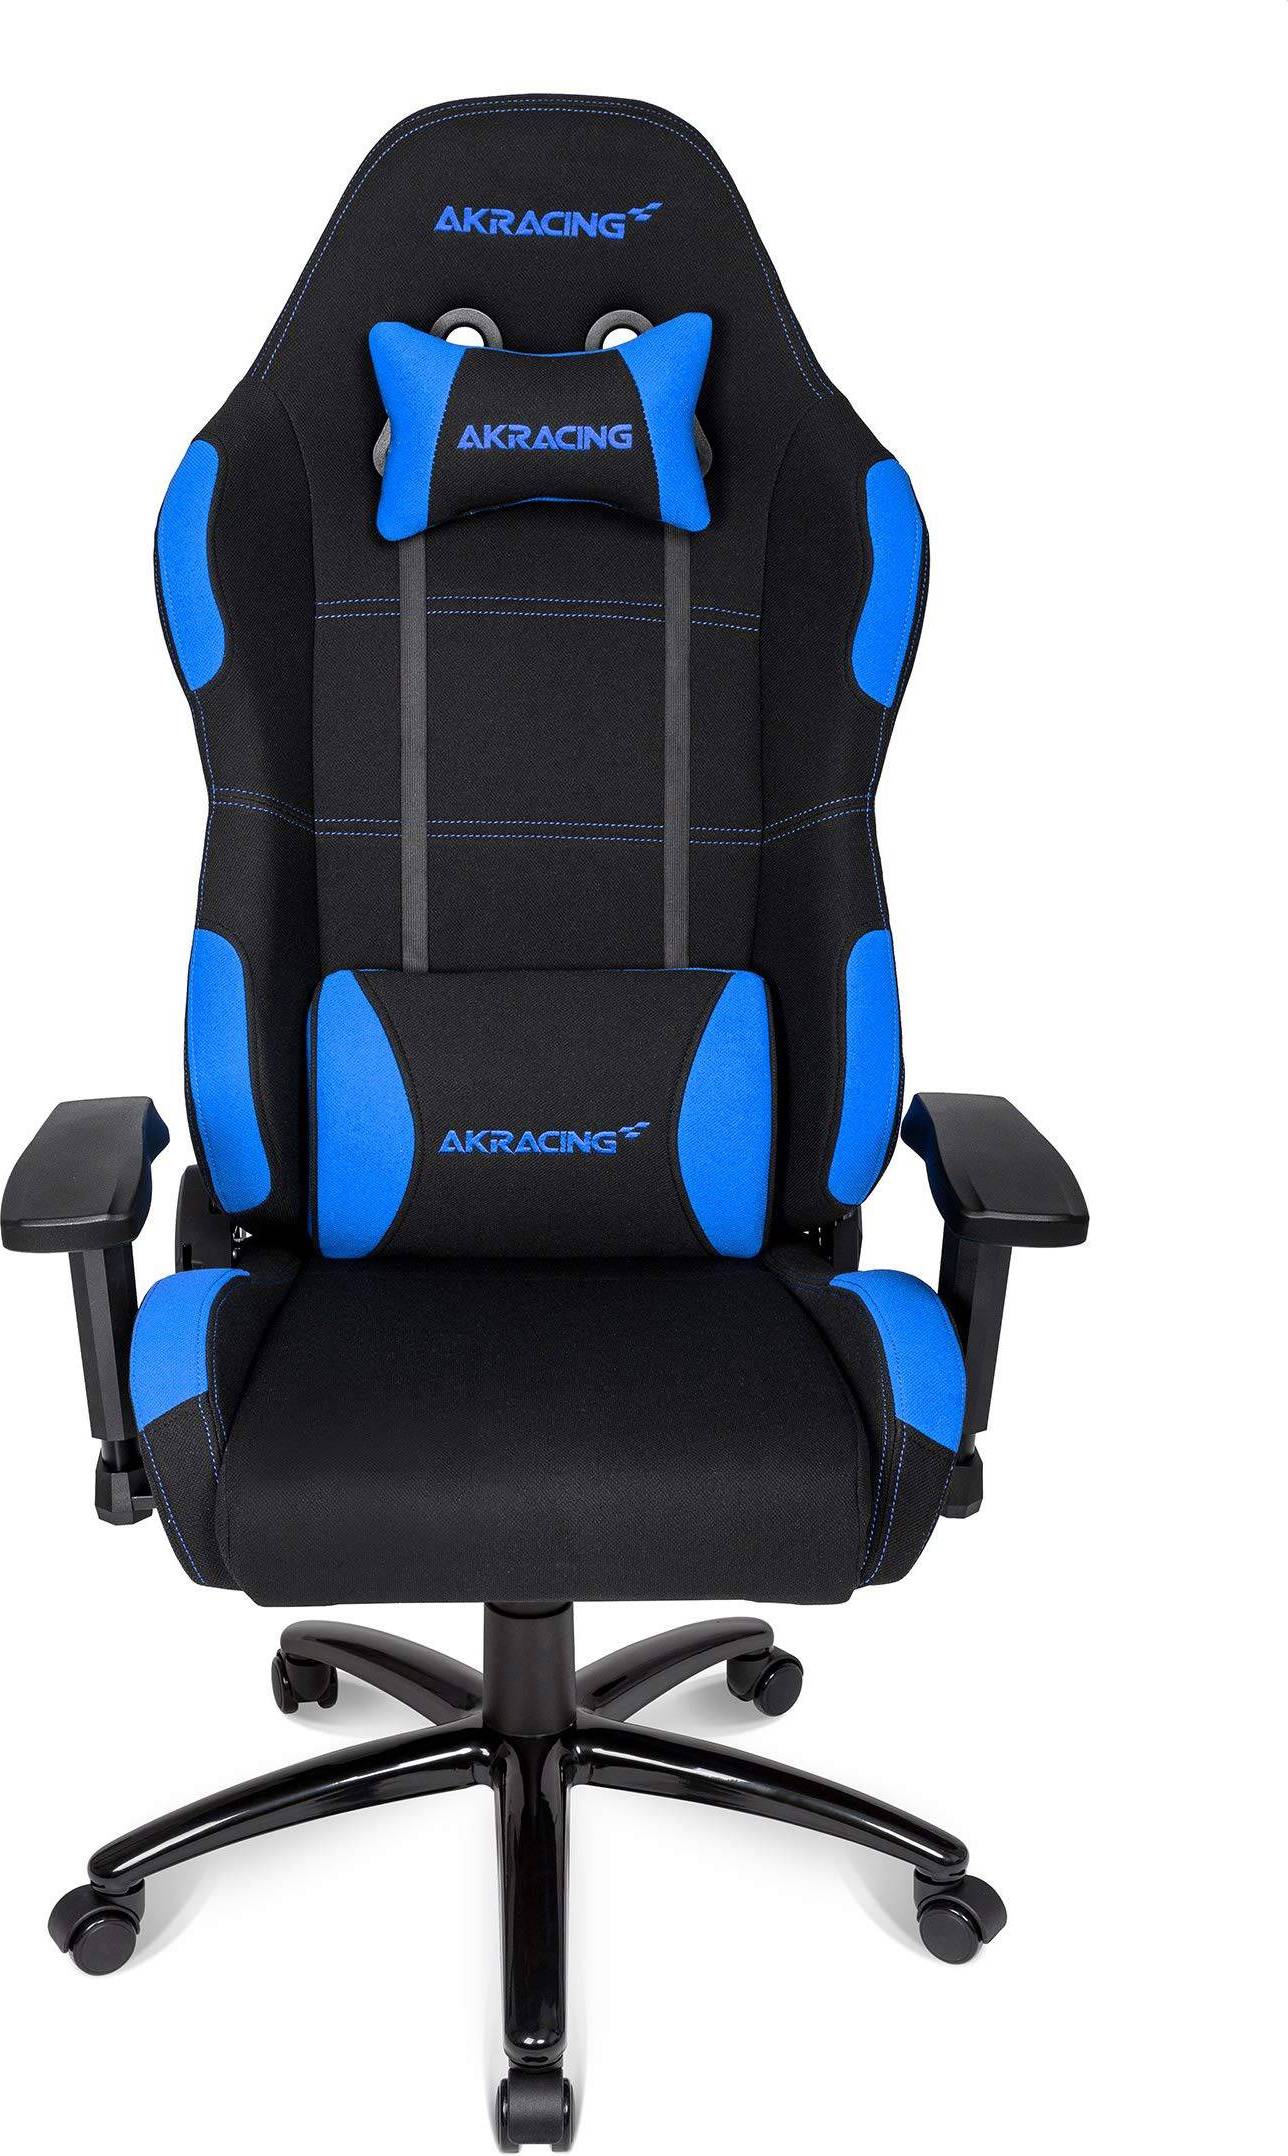  Bild på AKracing EX Gaming Chair - Black/Blue gamingstol